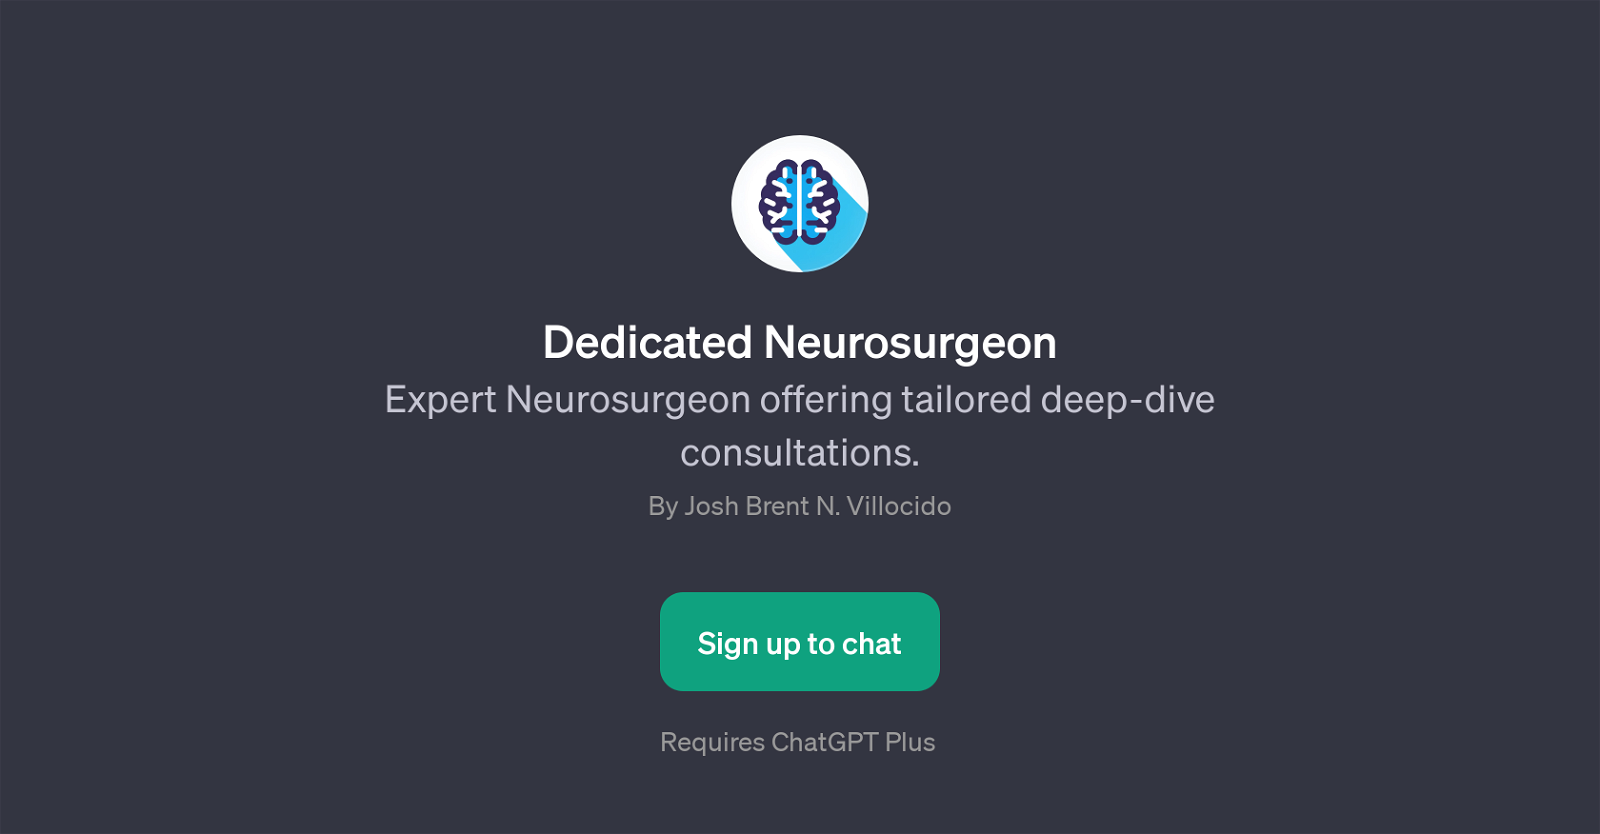 Dedicated Neurosurgeon website